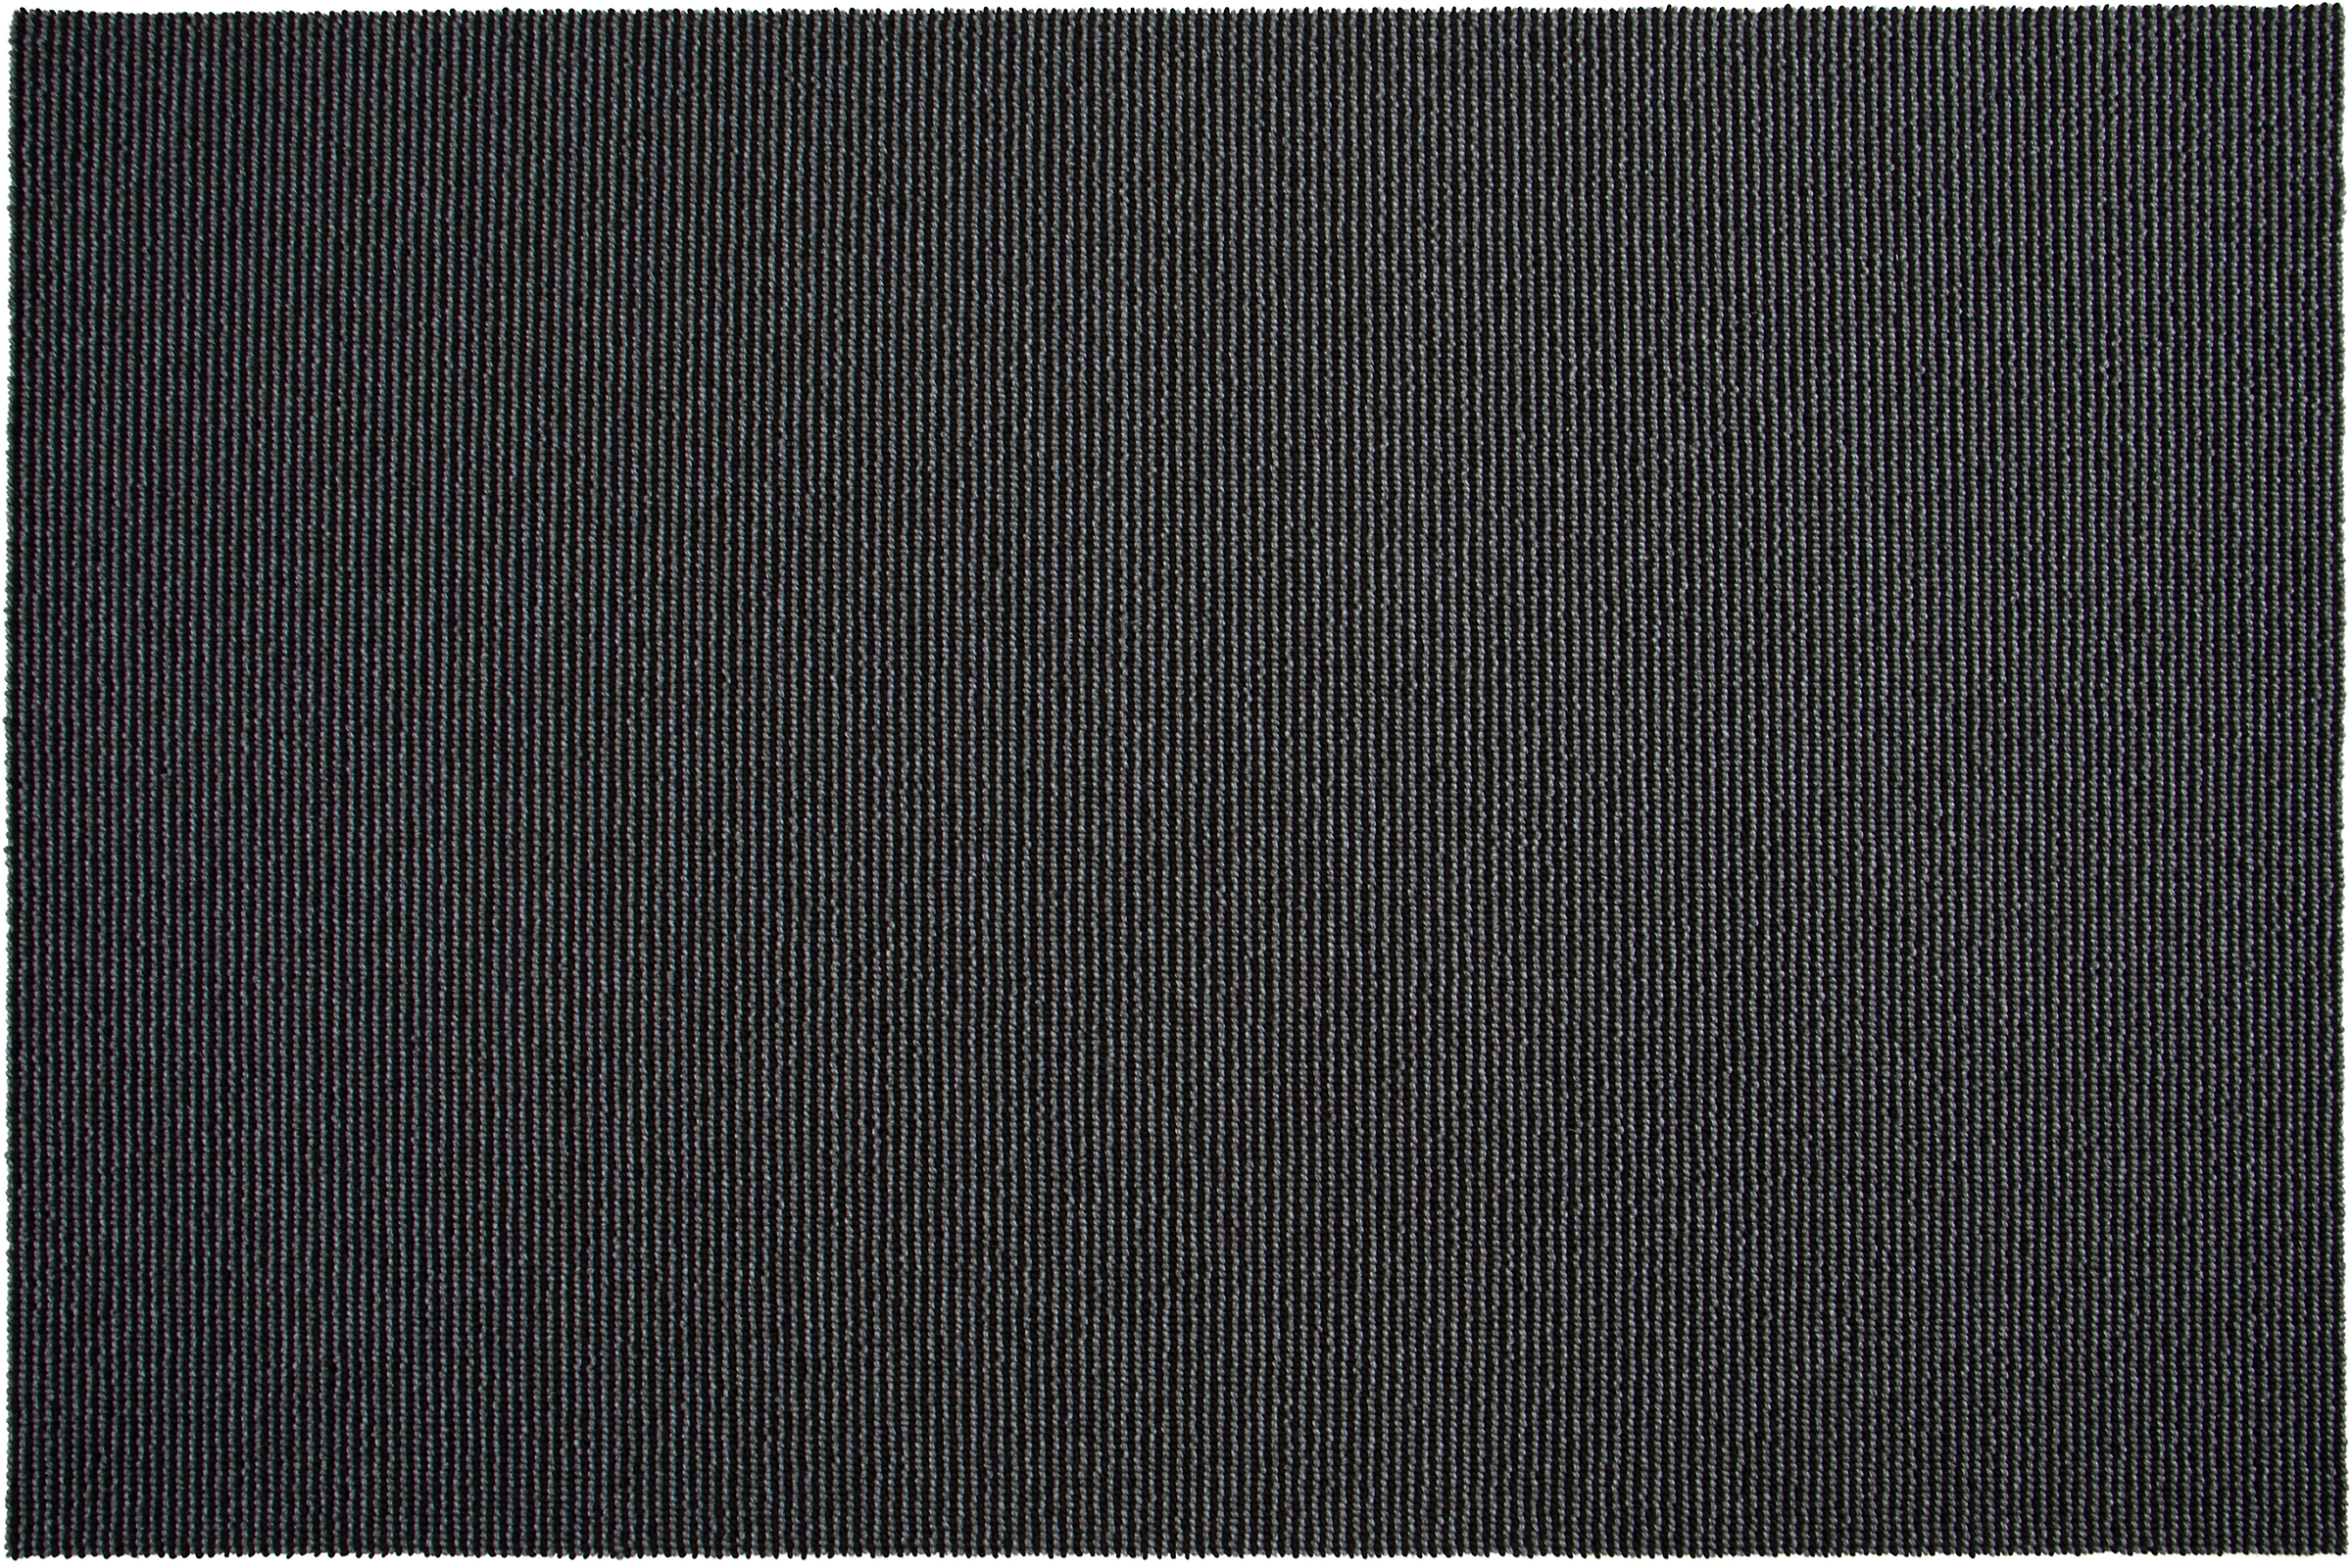 Colfax 6'x9' Rug in Black/Charcoal